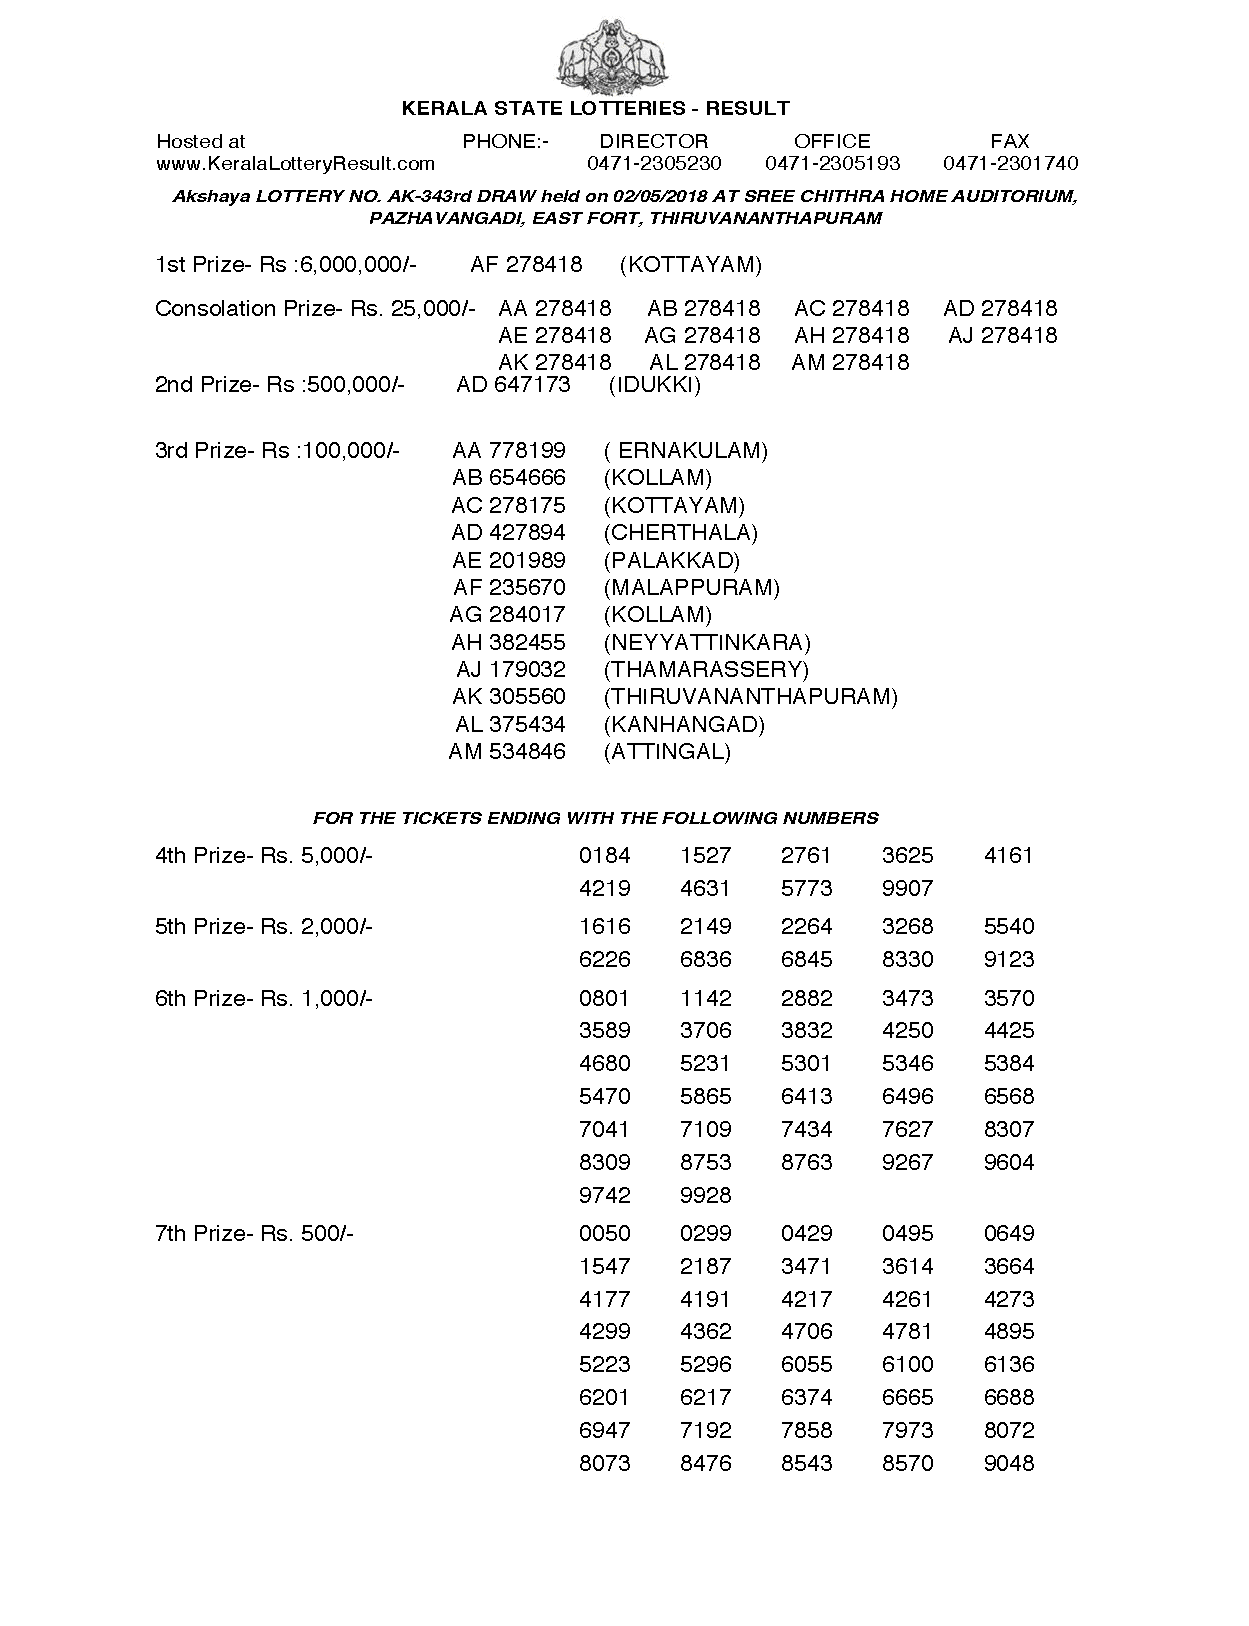 Akshaya AK343 Kerala Lottery Results Screenshot: Page 1